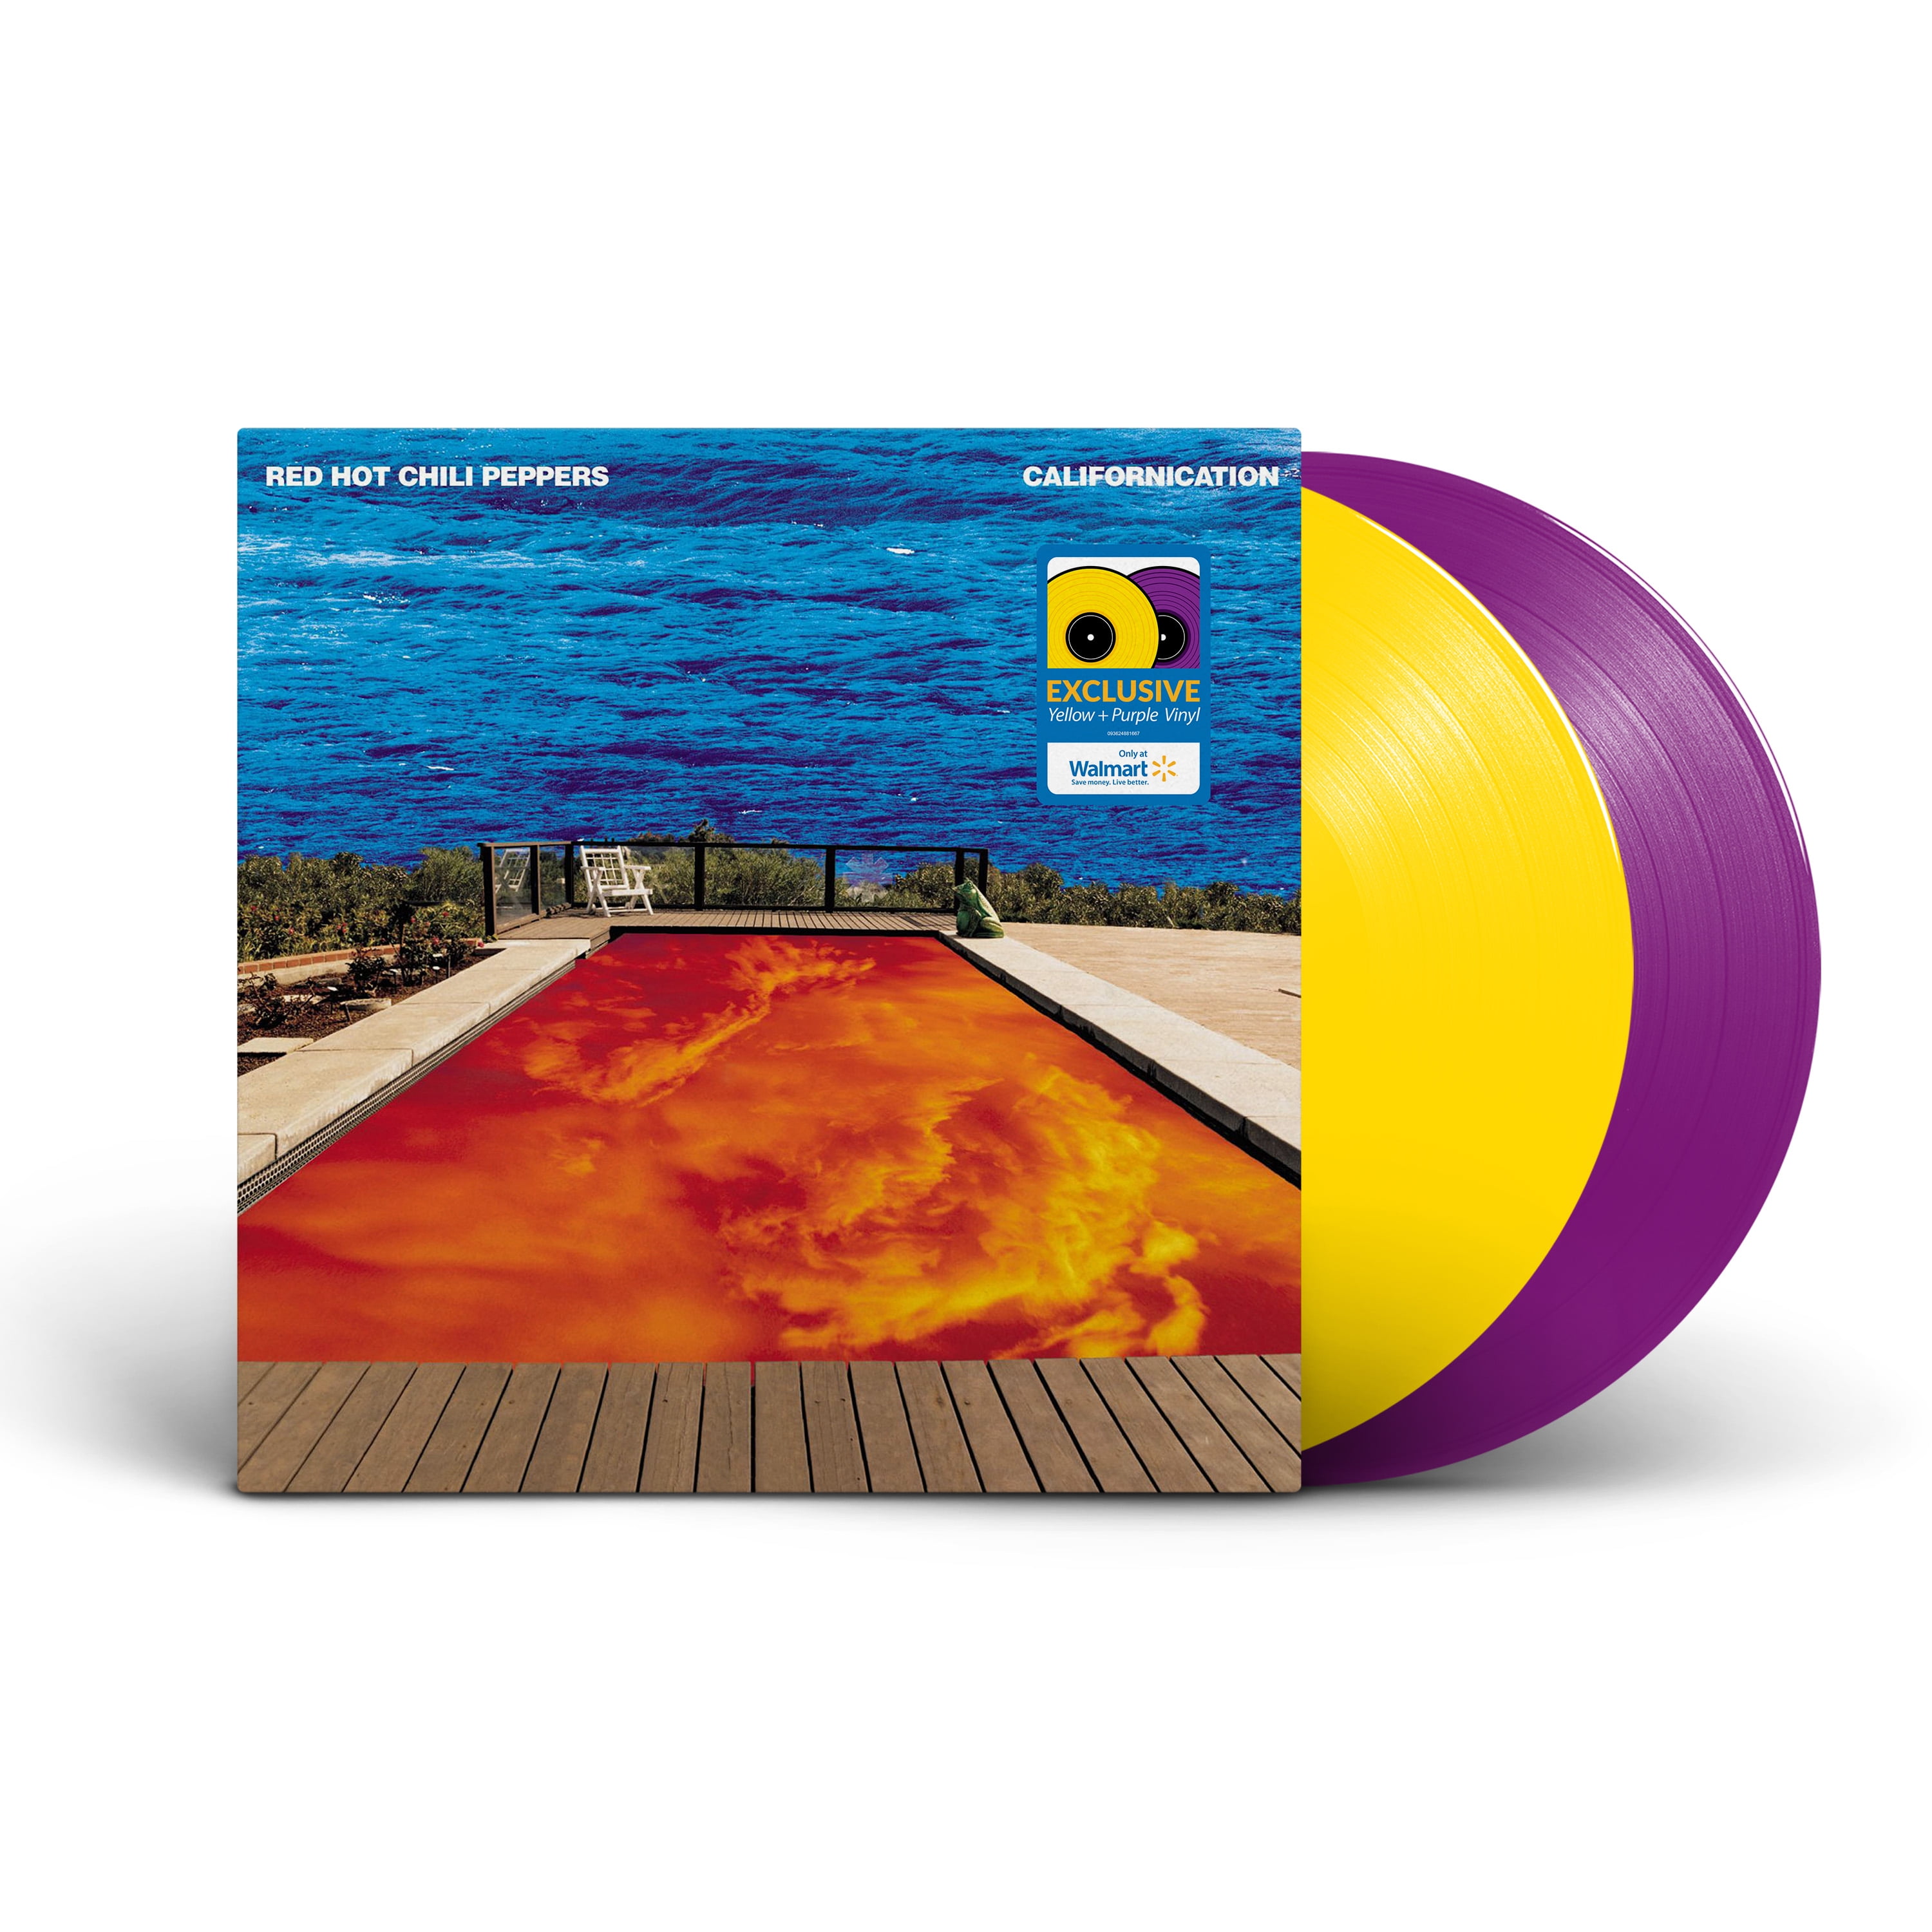 Red Hot Chili Peppers - Californication - 2LP (Walmart Exclusive) - Rock Vinyl -